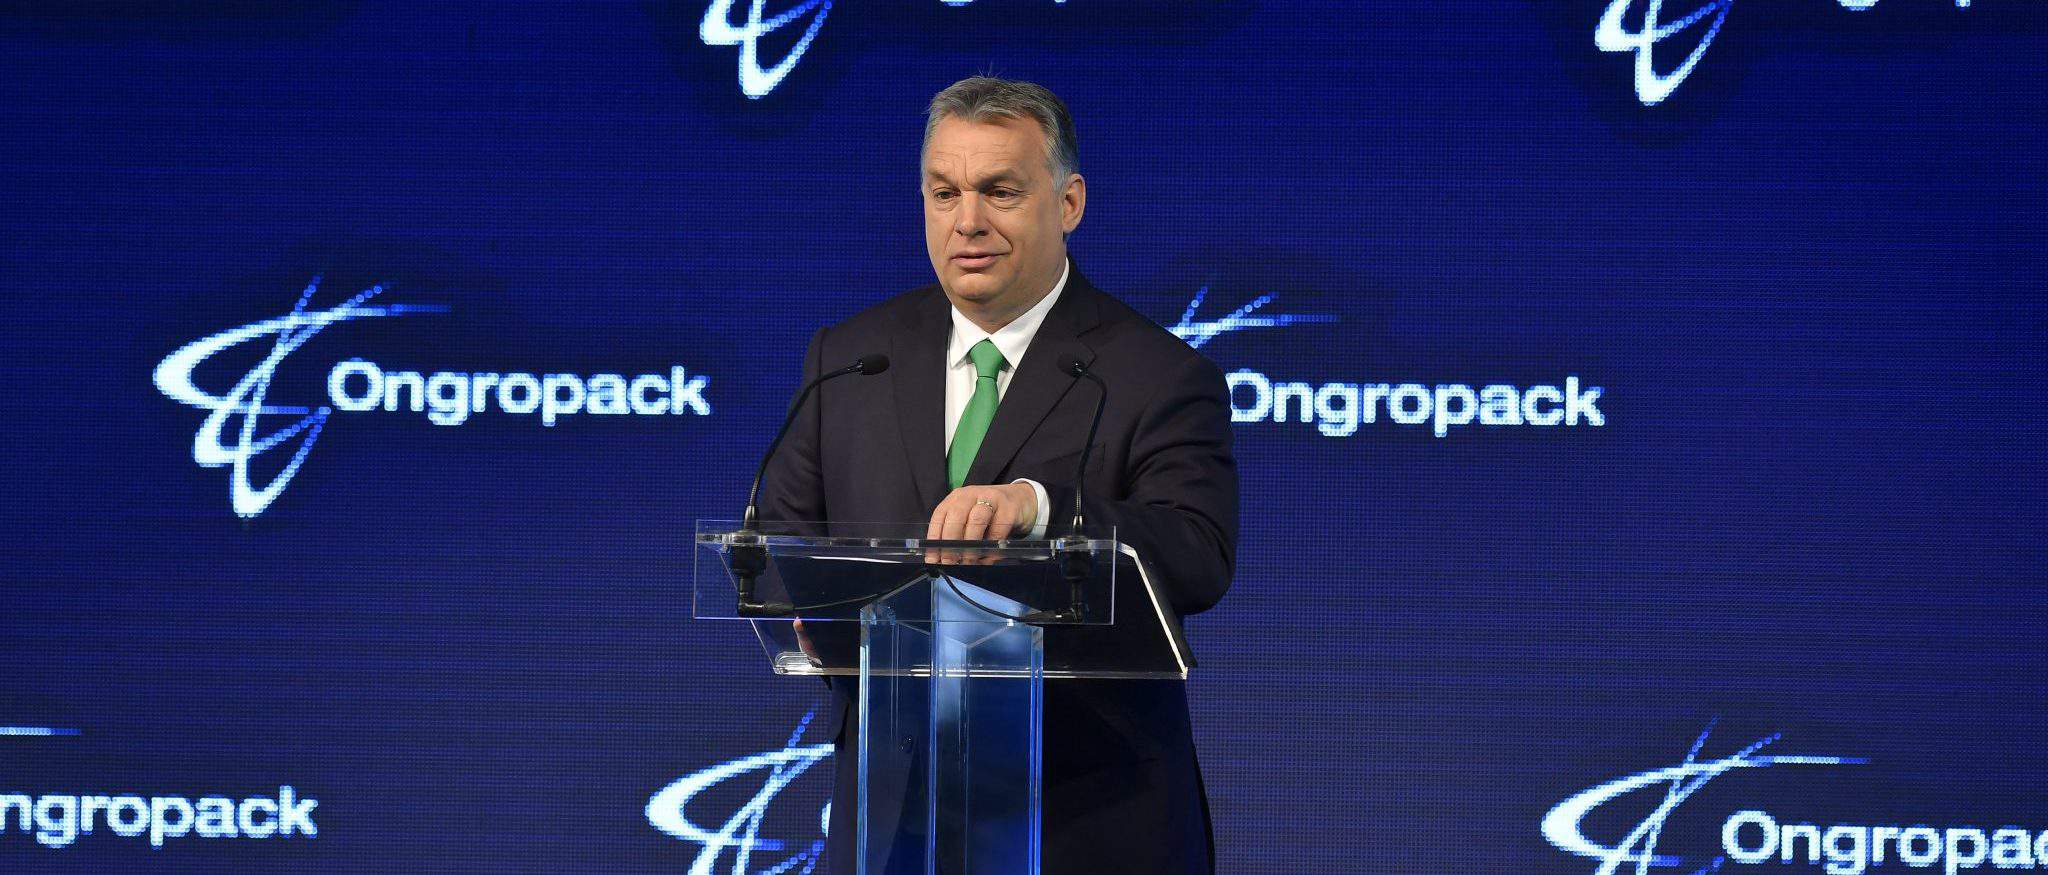 Vikto Orbán 总理讲话